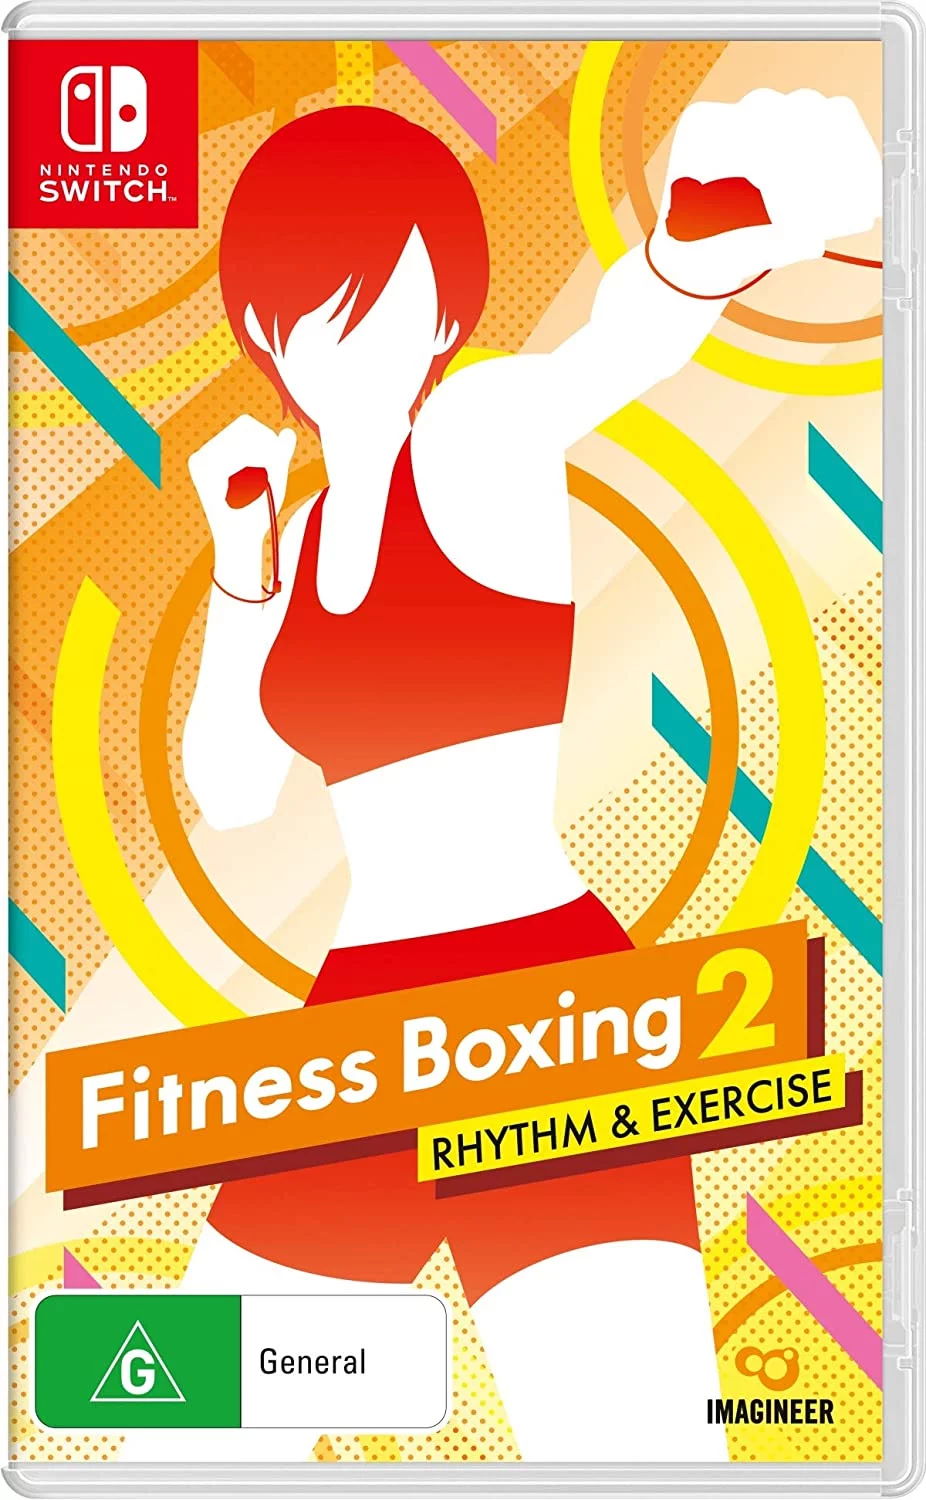 fitness-boxing-2-rhythm-exercise.jpg